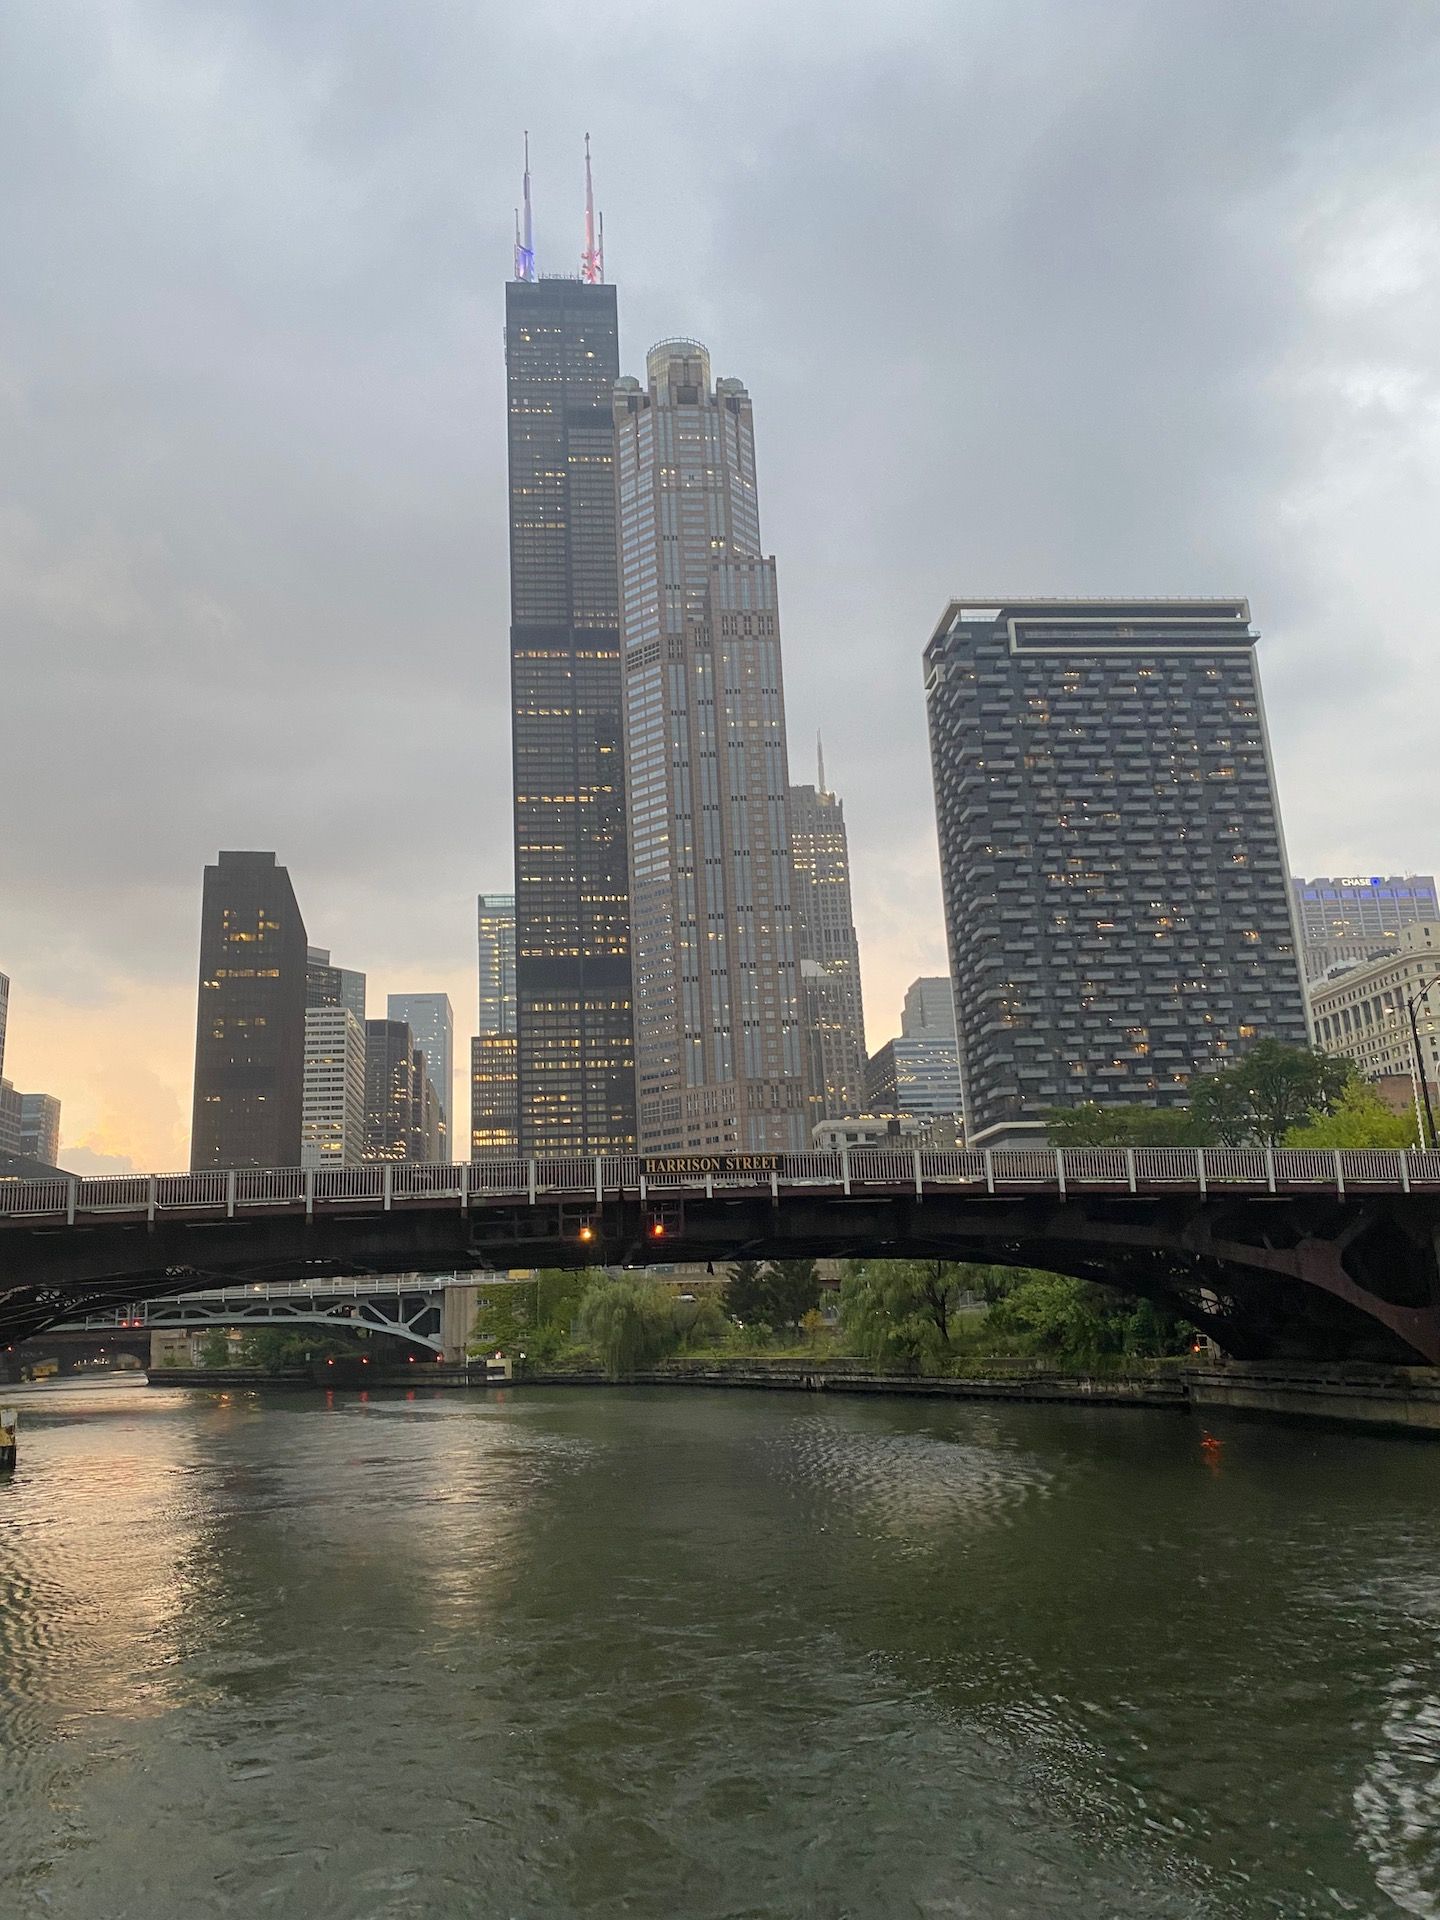 Photodump: Visiting Chicago 2021